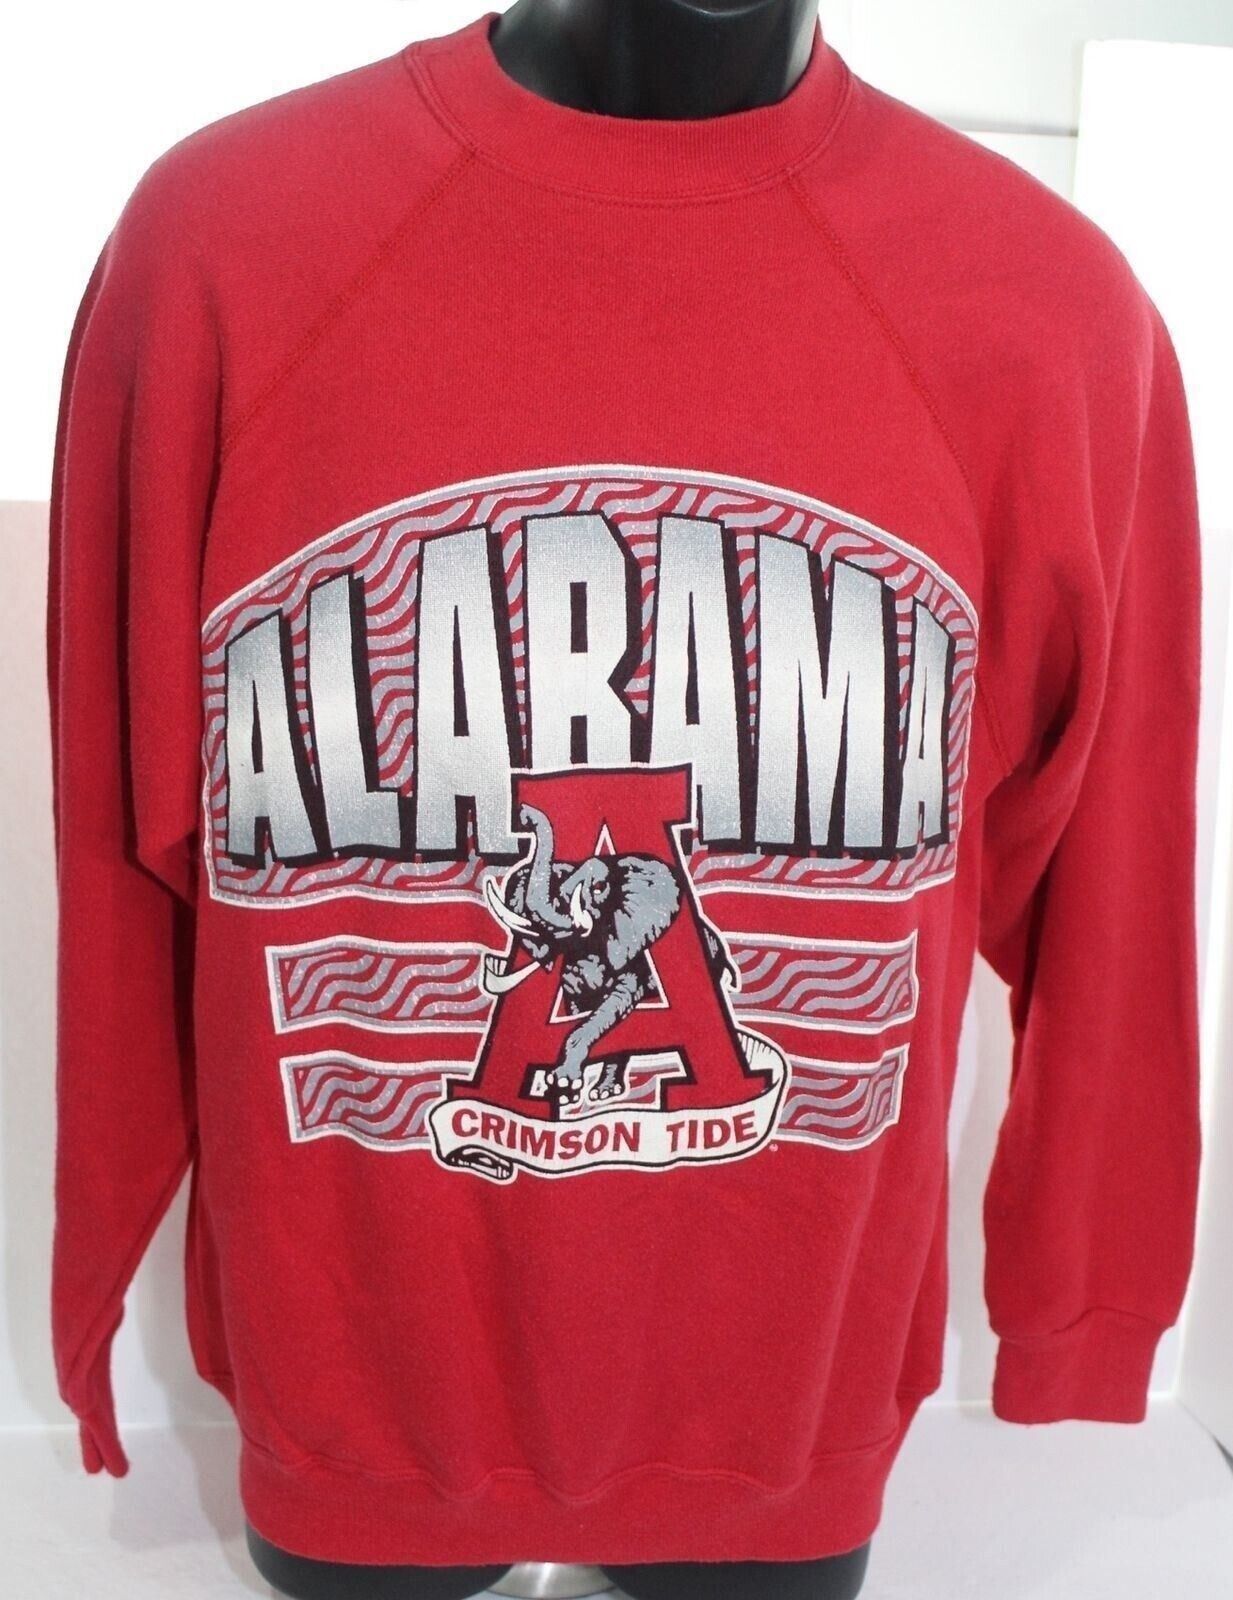 Vintage 1970s Alabama Crimson Tide Artex Crew Neck Sweatshirt Made in USA Medium